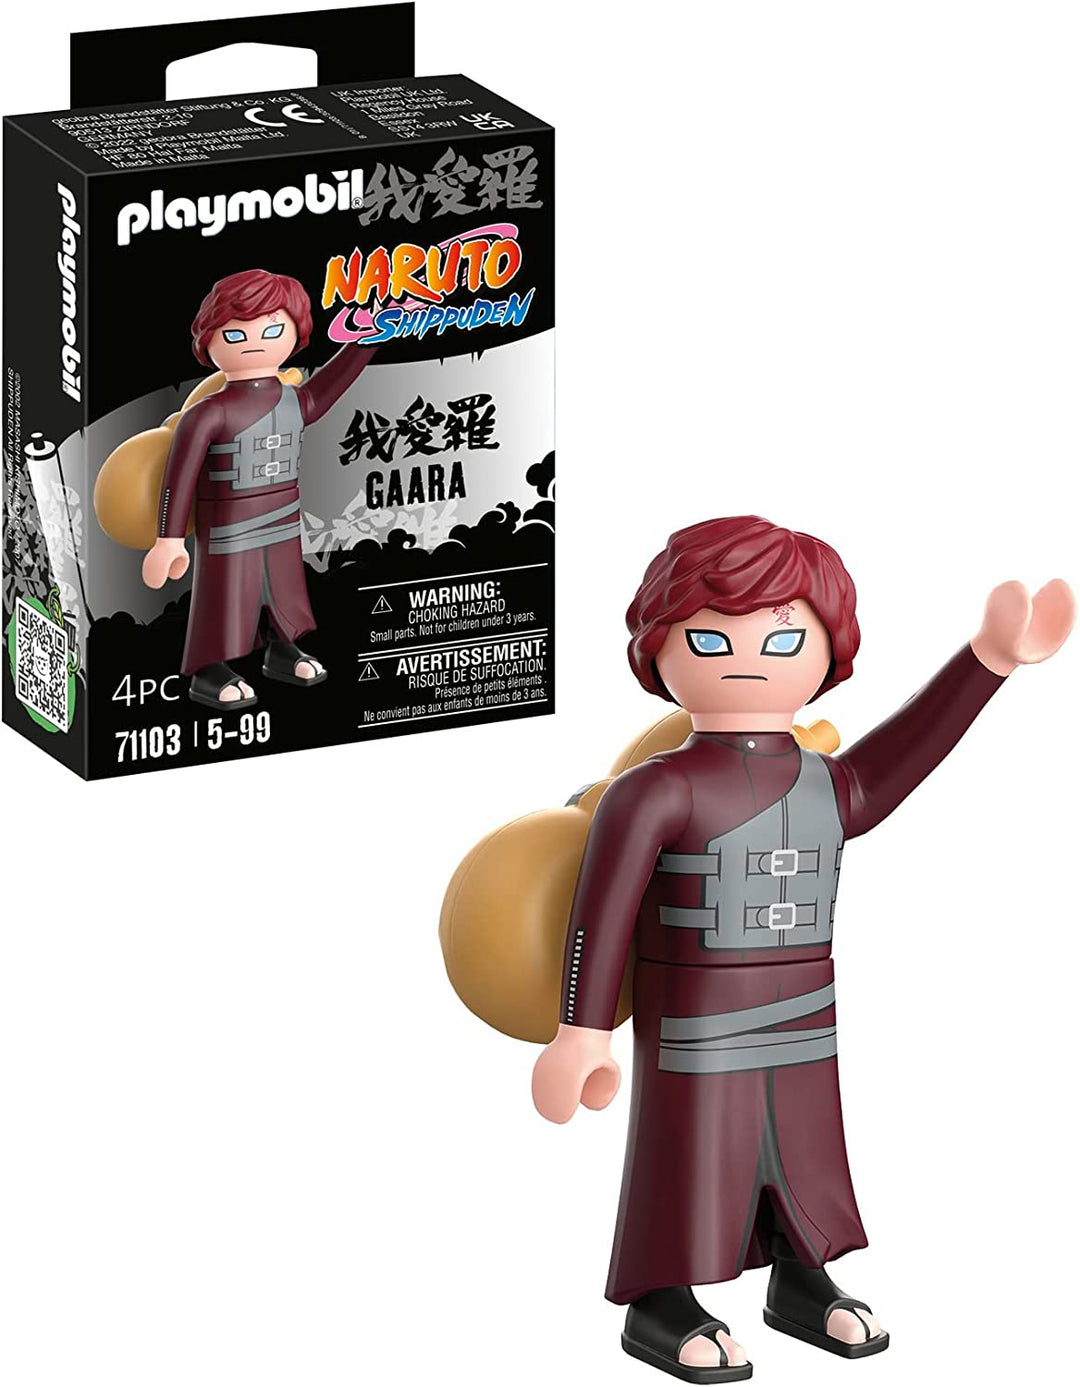 Playmobil 71103 Naruto: Gaara Figure Set